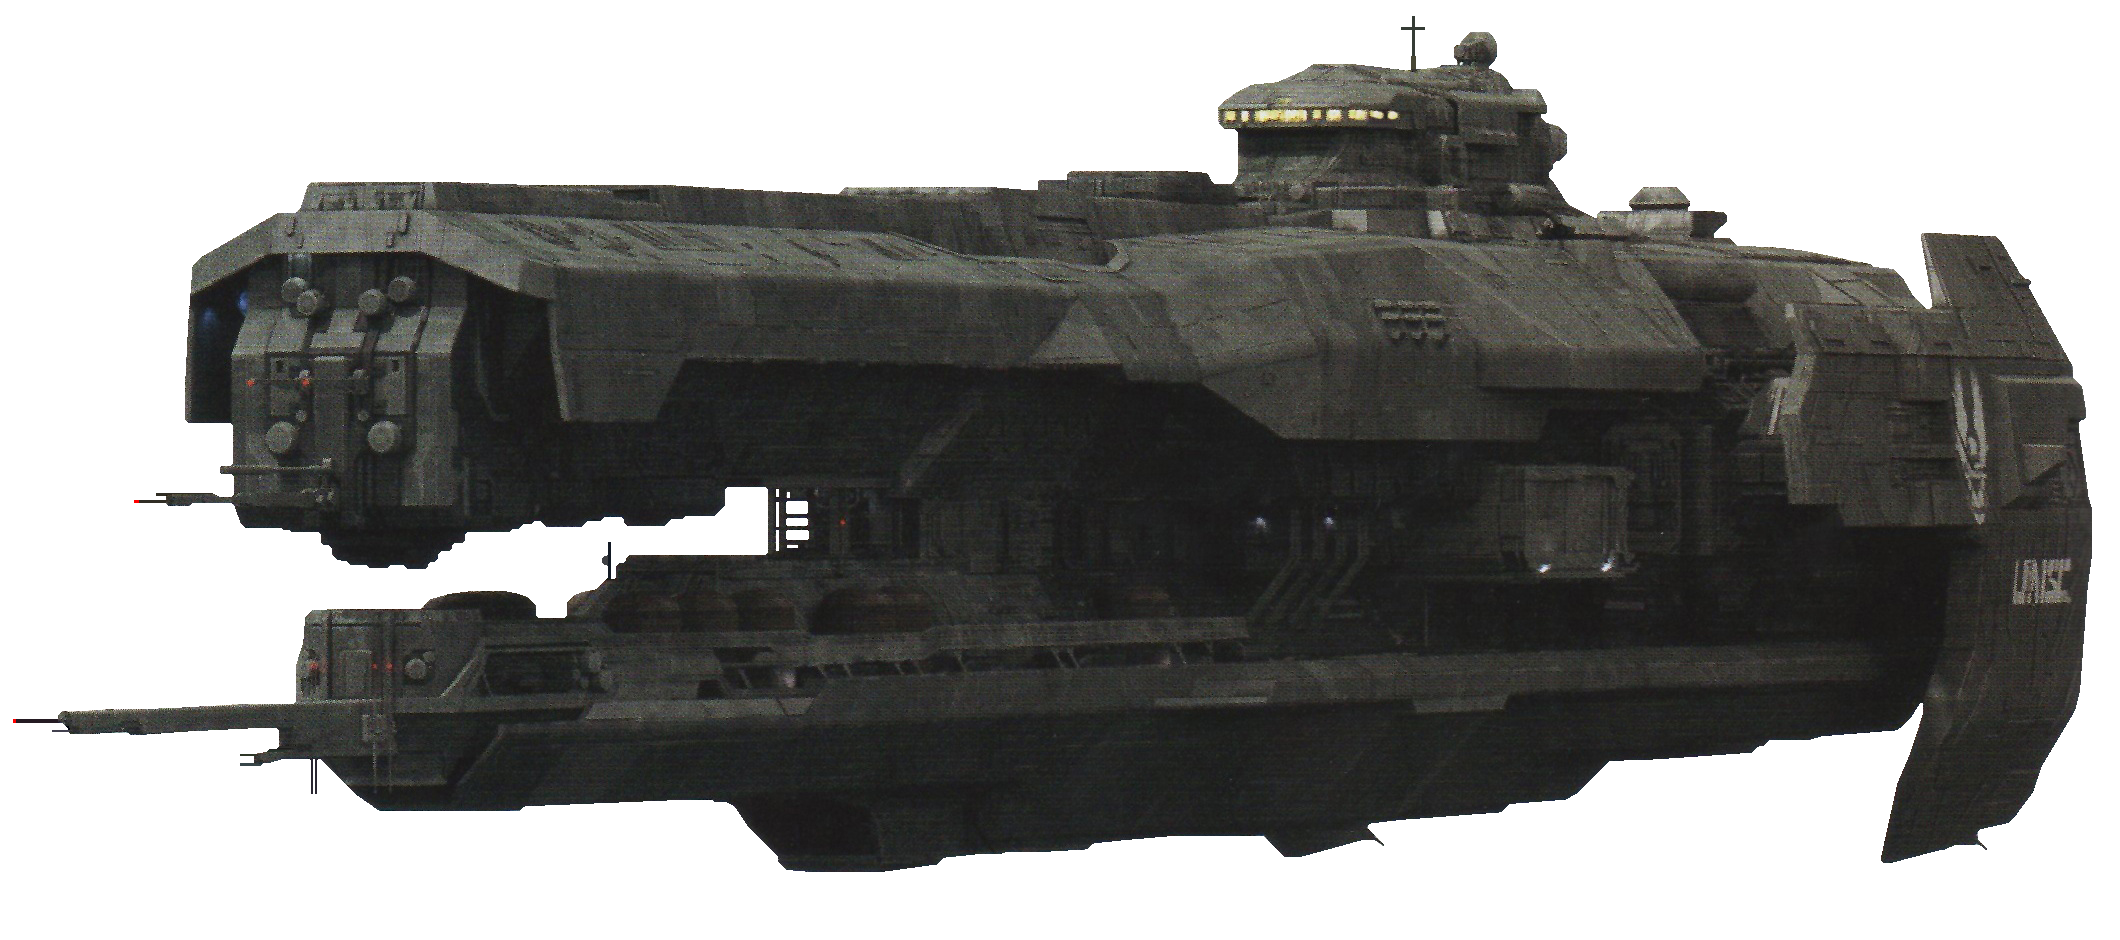 F-41 Broadsword - Ship class - Halopedia, the Halo wiki